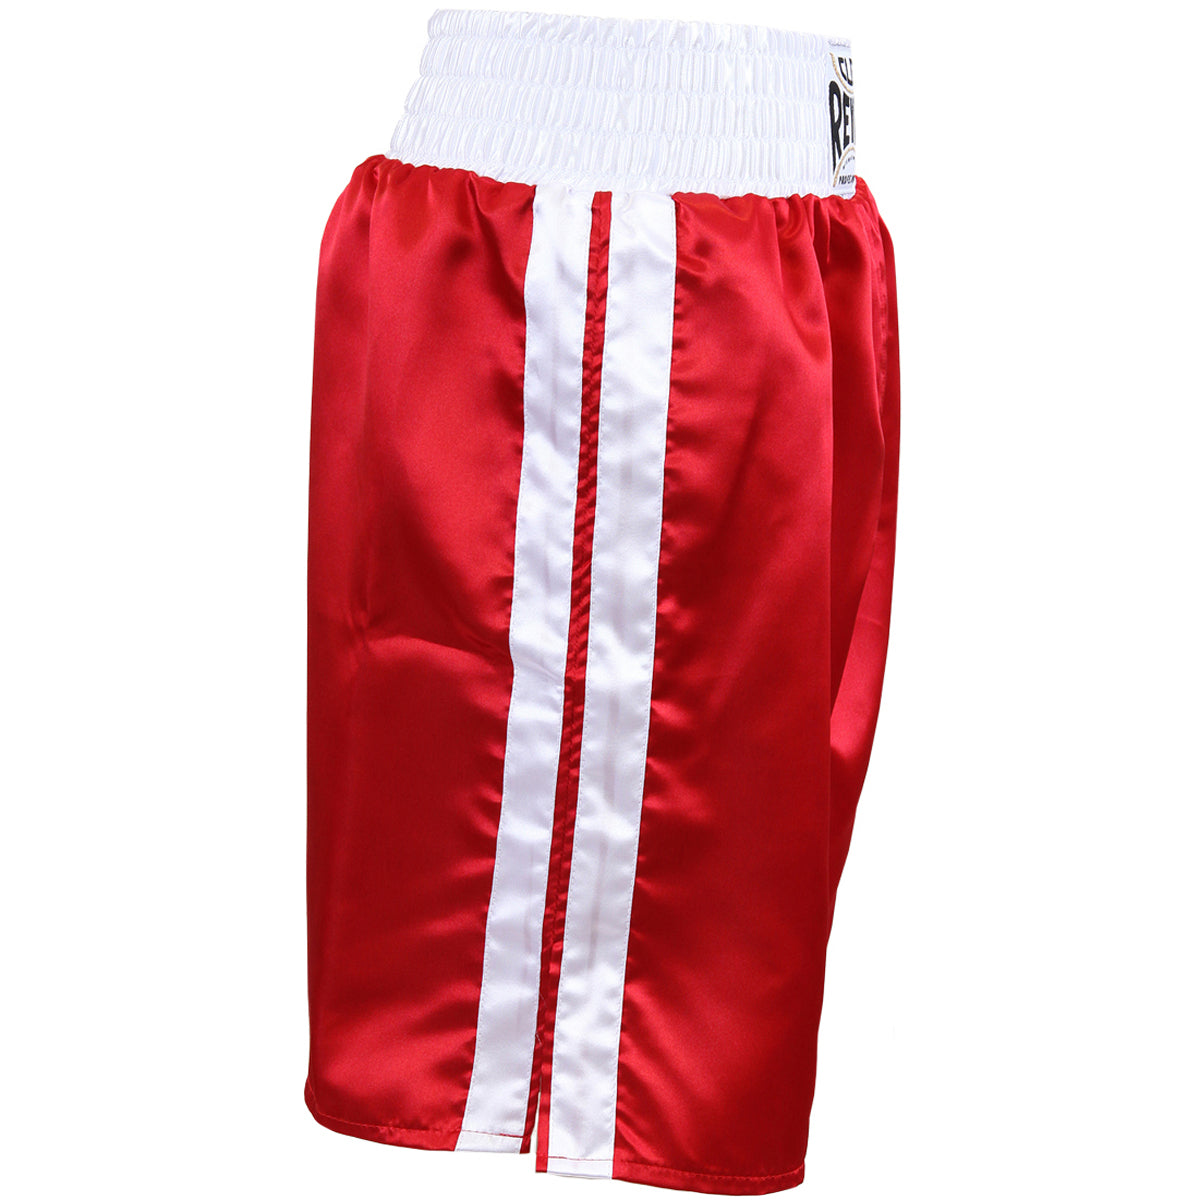 Cleto Reyes Satin Classic Boxing Trunks - XL (44") - Red/White Cleto Reyes